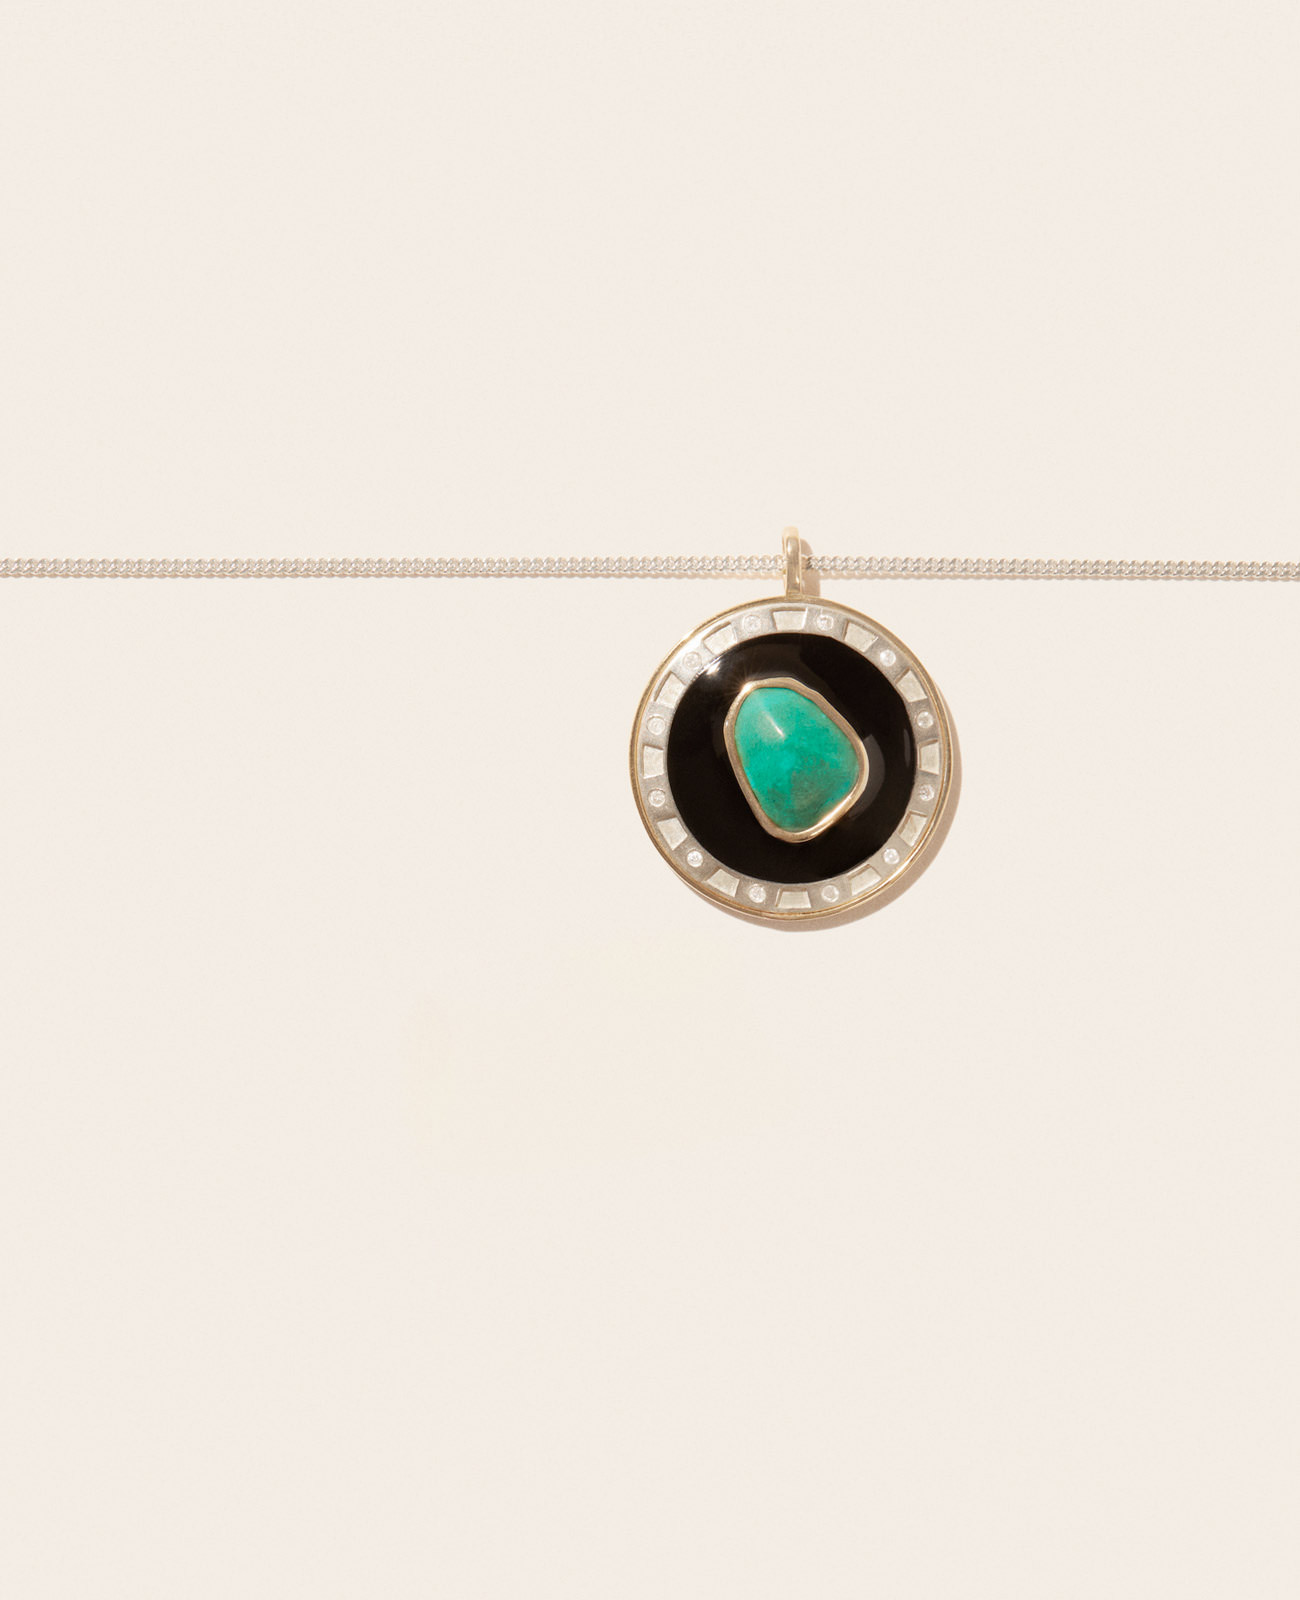 STROMBOLI N°1 necklace pascale monvoisin jewelry paris